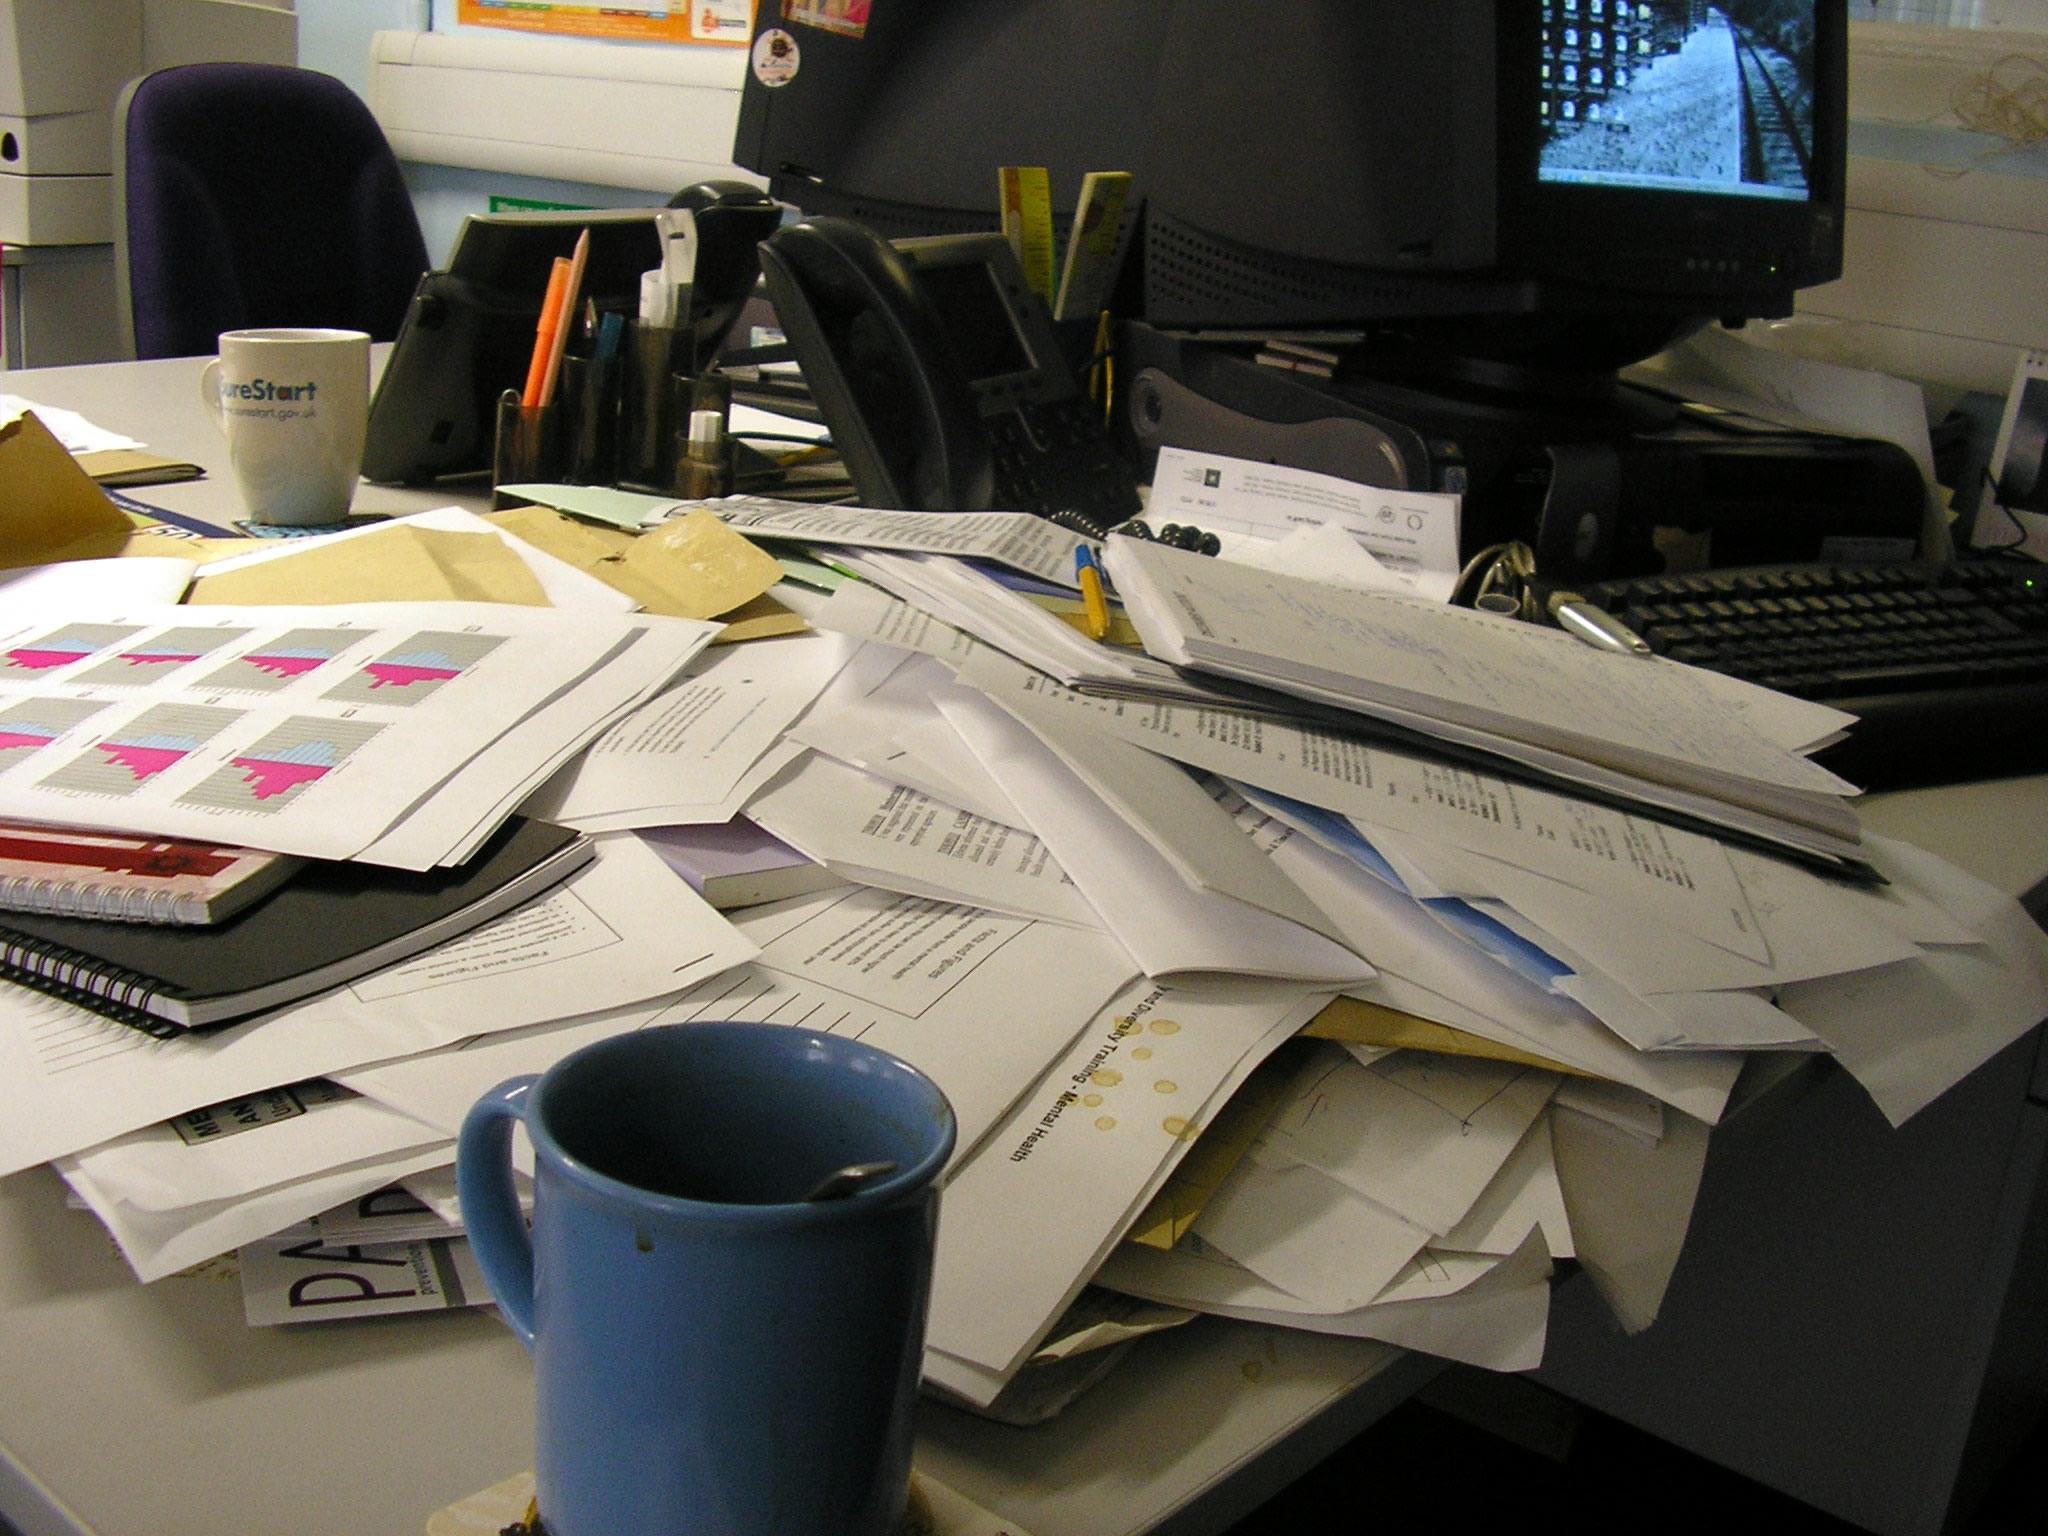 Office papers. Бумаги на столе. Стол заваленный бумагами. Письменный стол с бумагами. Письменный стол заваленный бумагами.